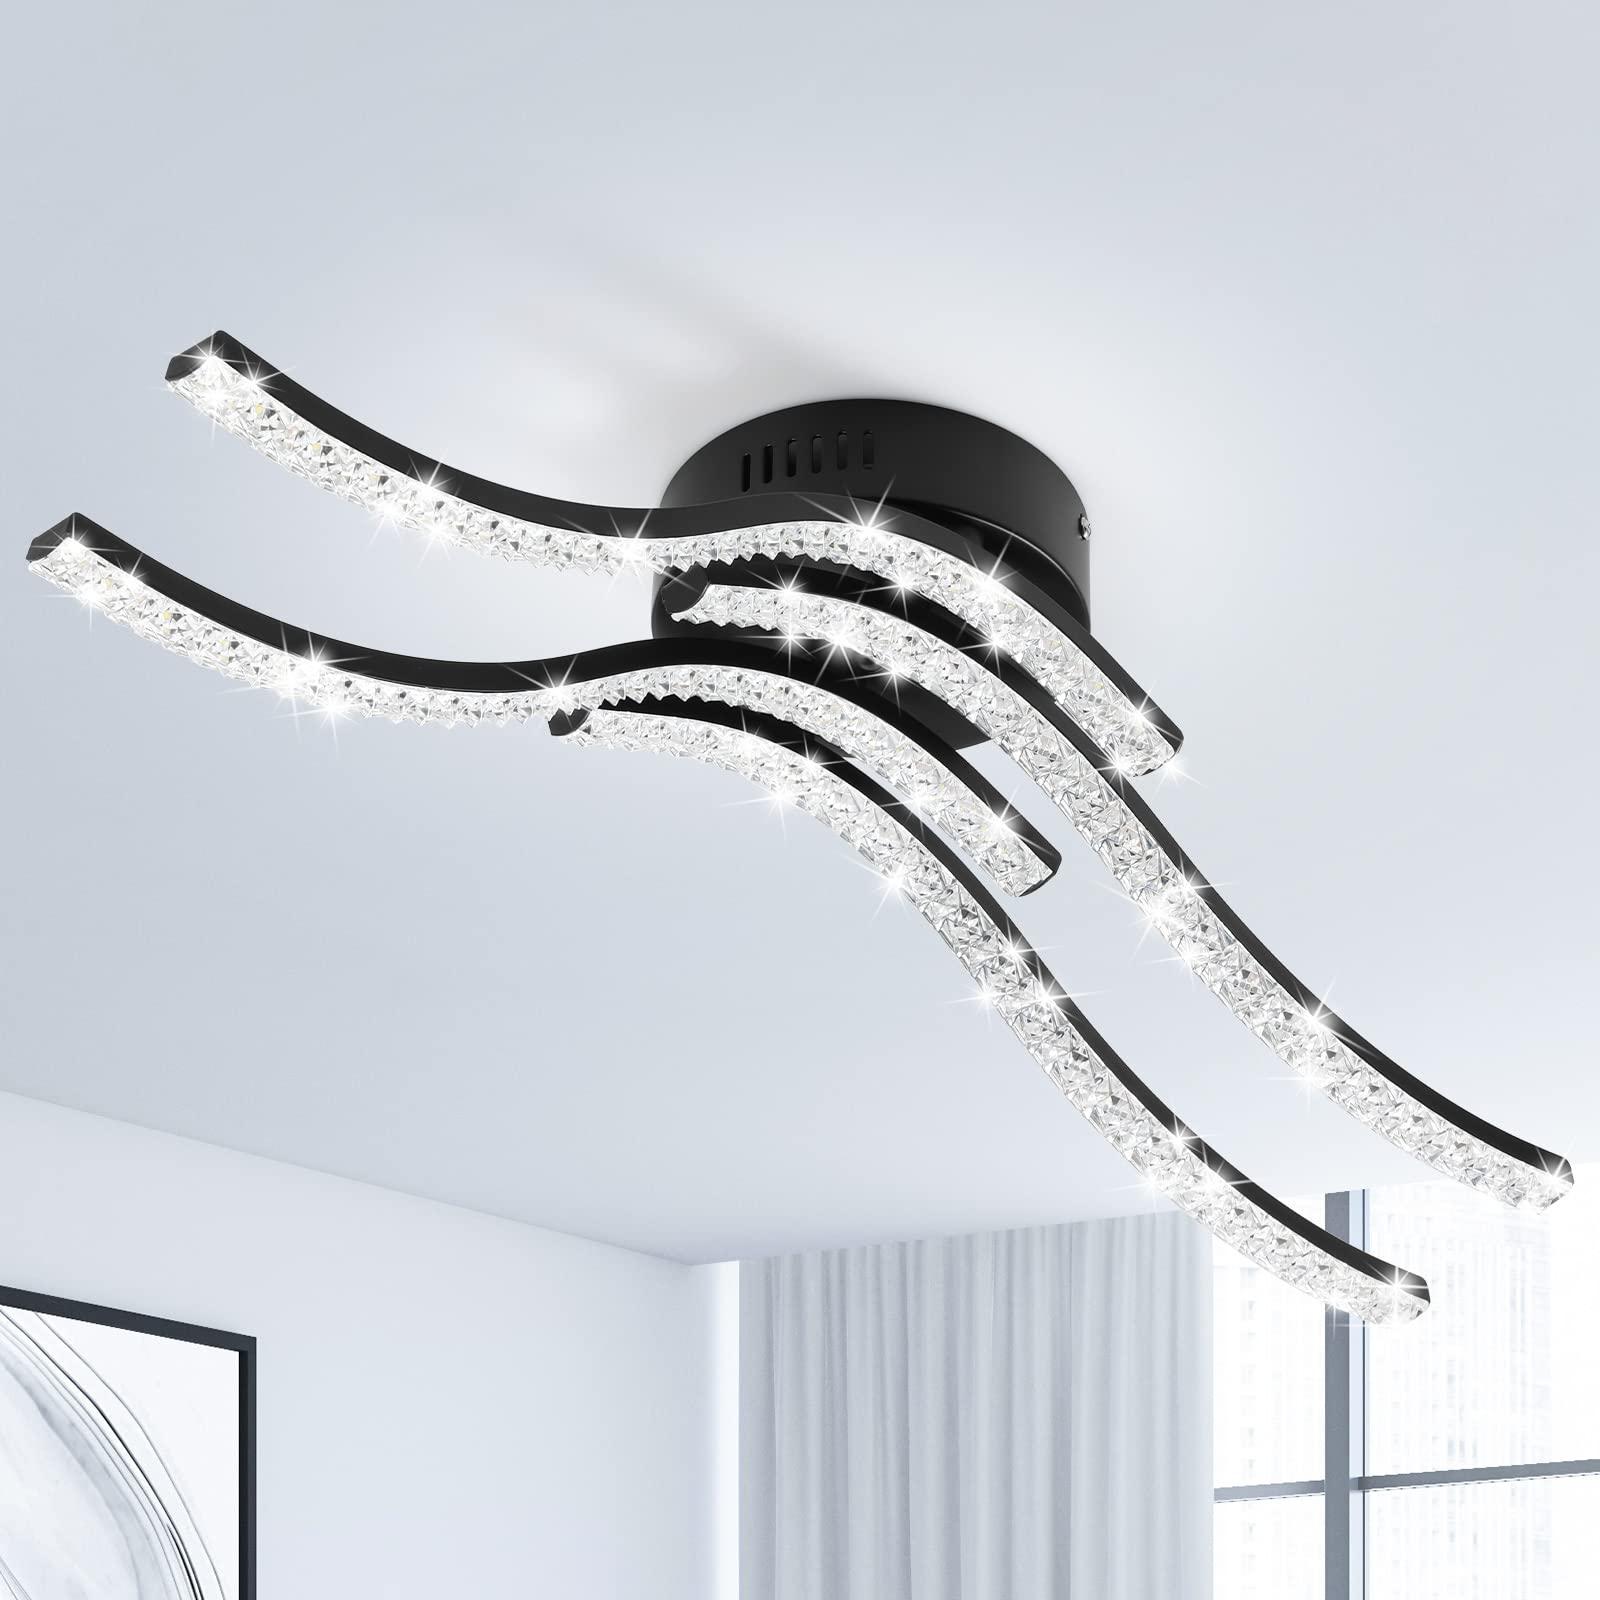 Zewanny LED Acrylic Ceiling Light 4 Built-in LED Boards,Flush Mount Ceiling Lights,32W 5500K,Wave Elegant Curved Design Ceilings Light Modern,for Dining Room Bedroom Kitchen Corridor